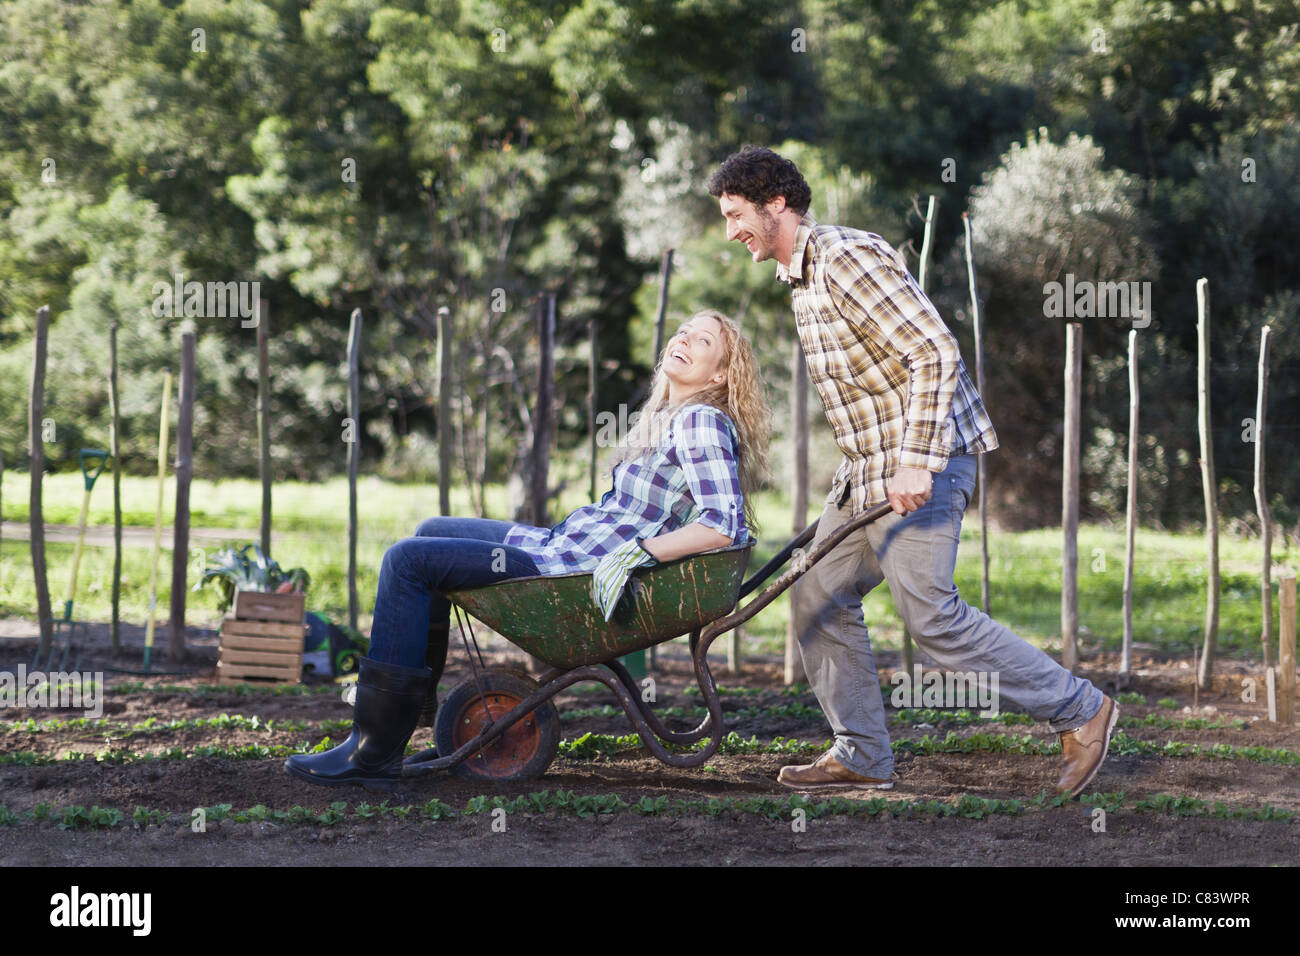 Man pushing girlfriend in wheelbarrow Stock Photo